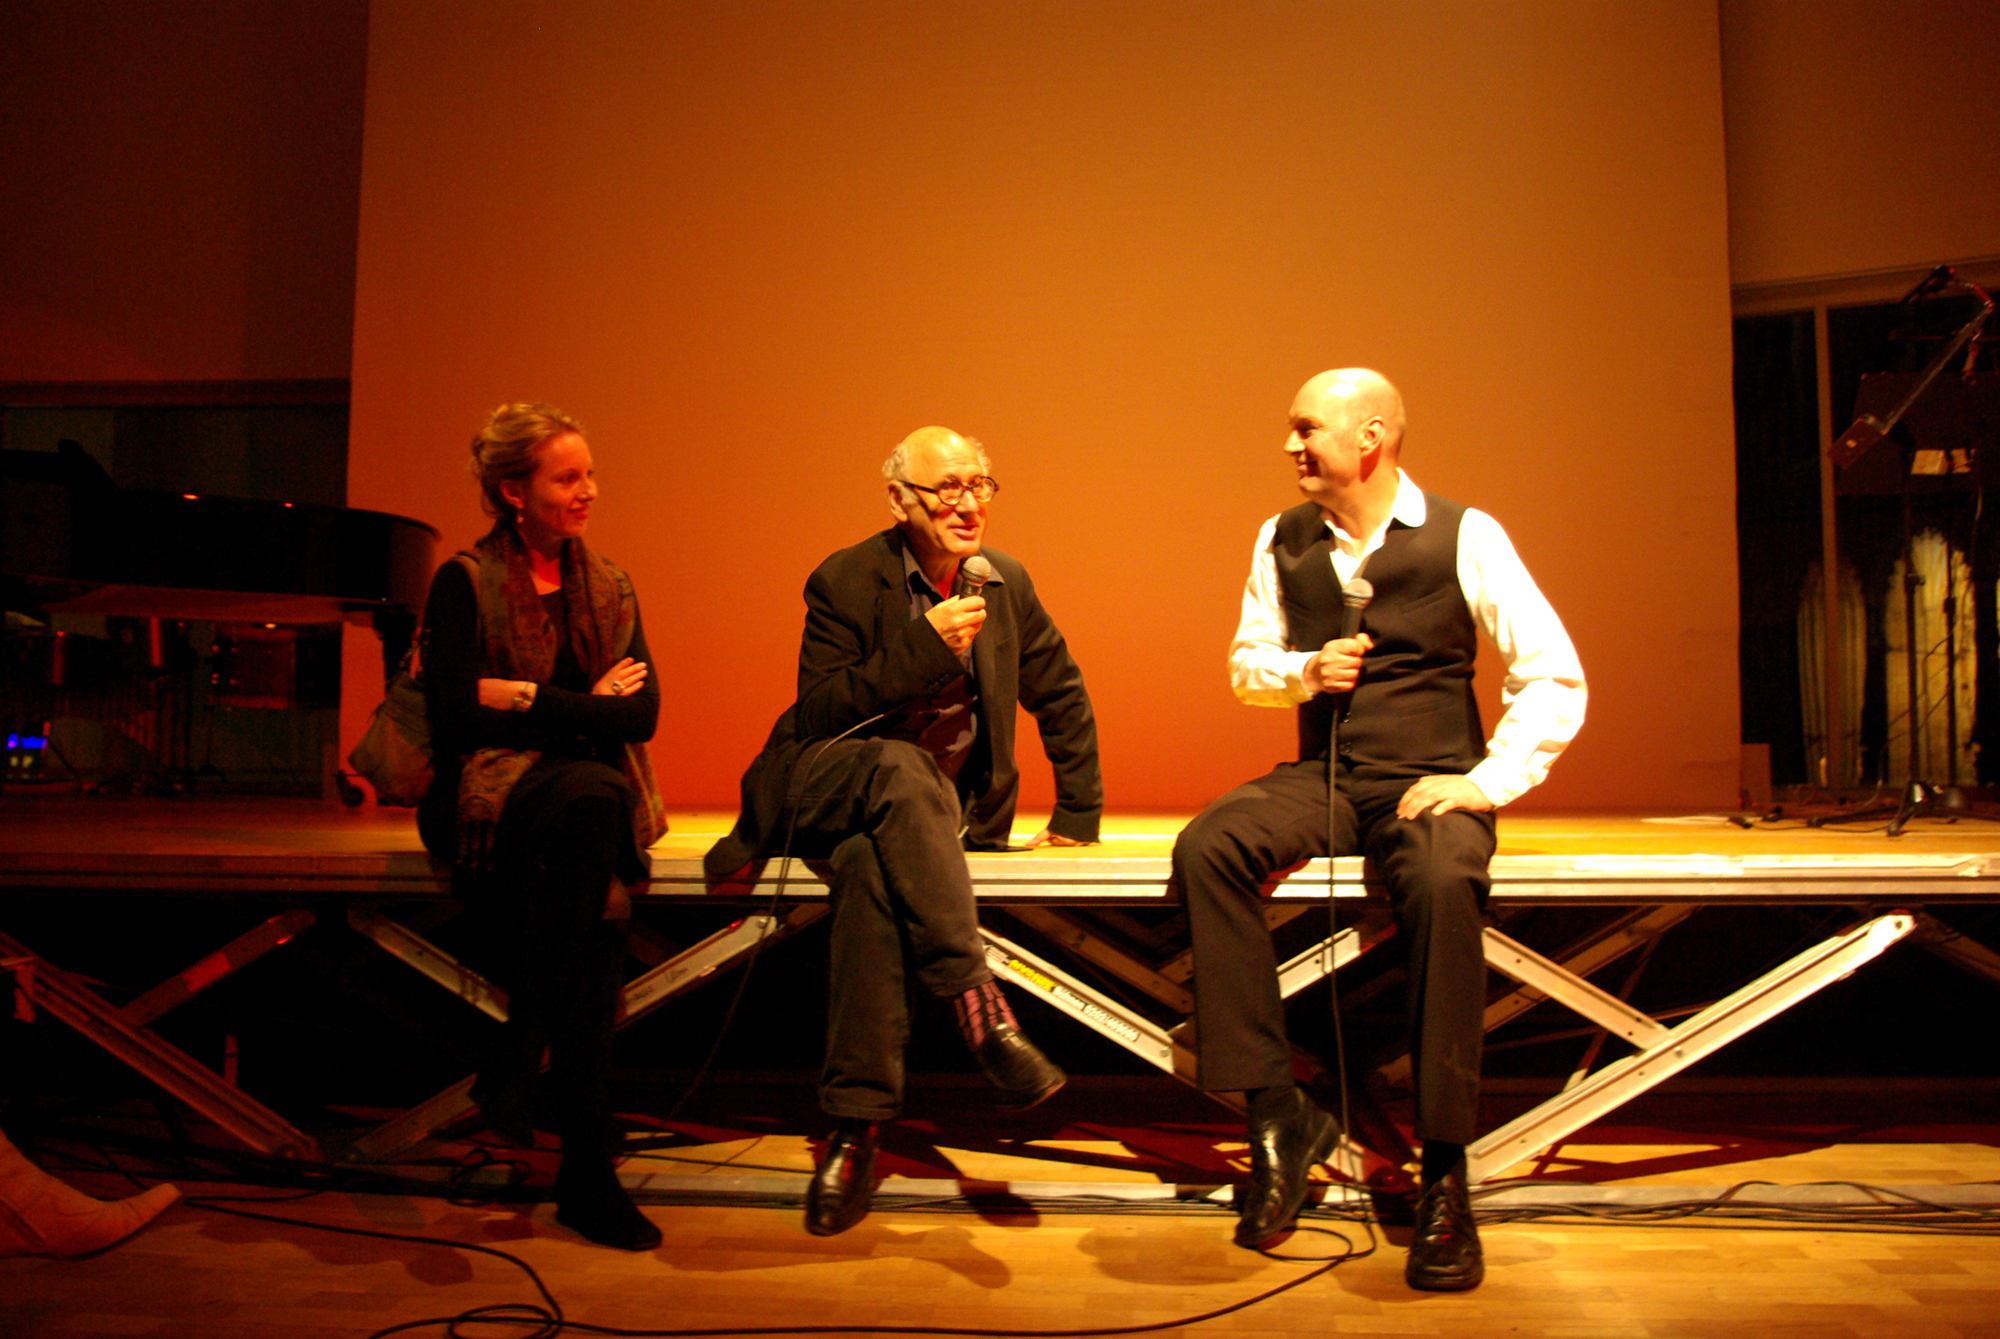 Jürgen Grözinger (right) in a conversation with composer Michael Nyman. Left: Annette Gentz